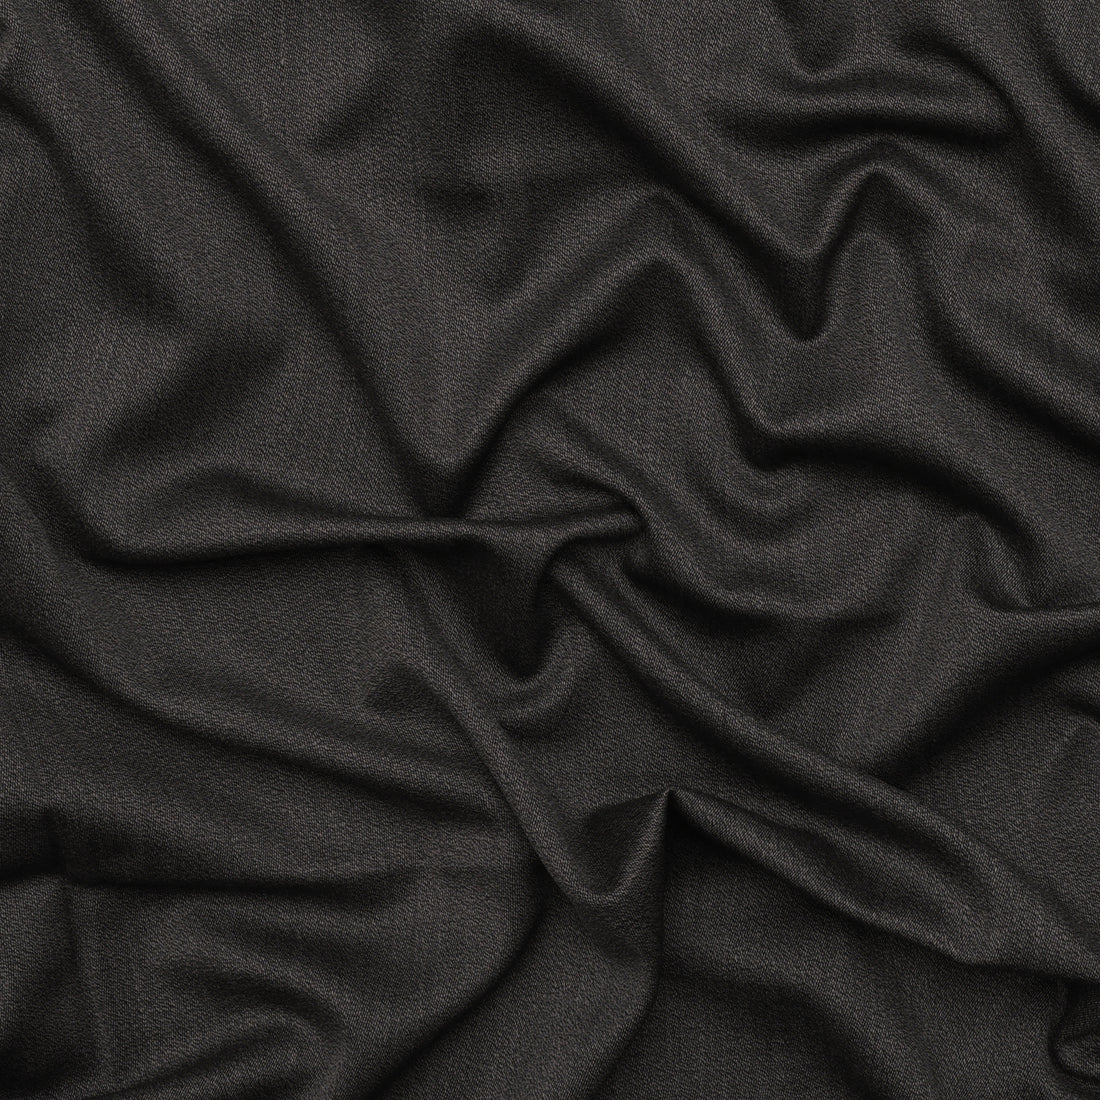 Merino Wool - Suiting - Solid Twill - Grey Black